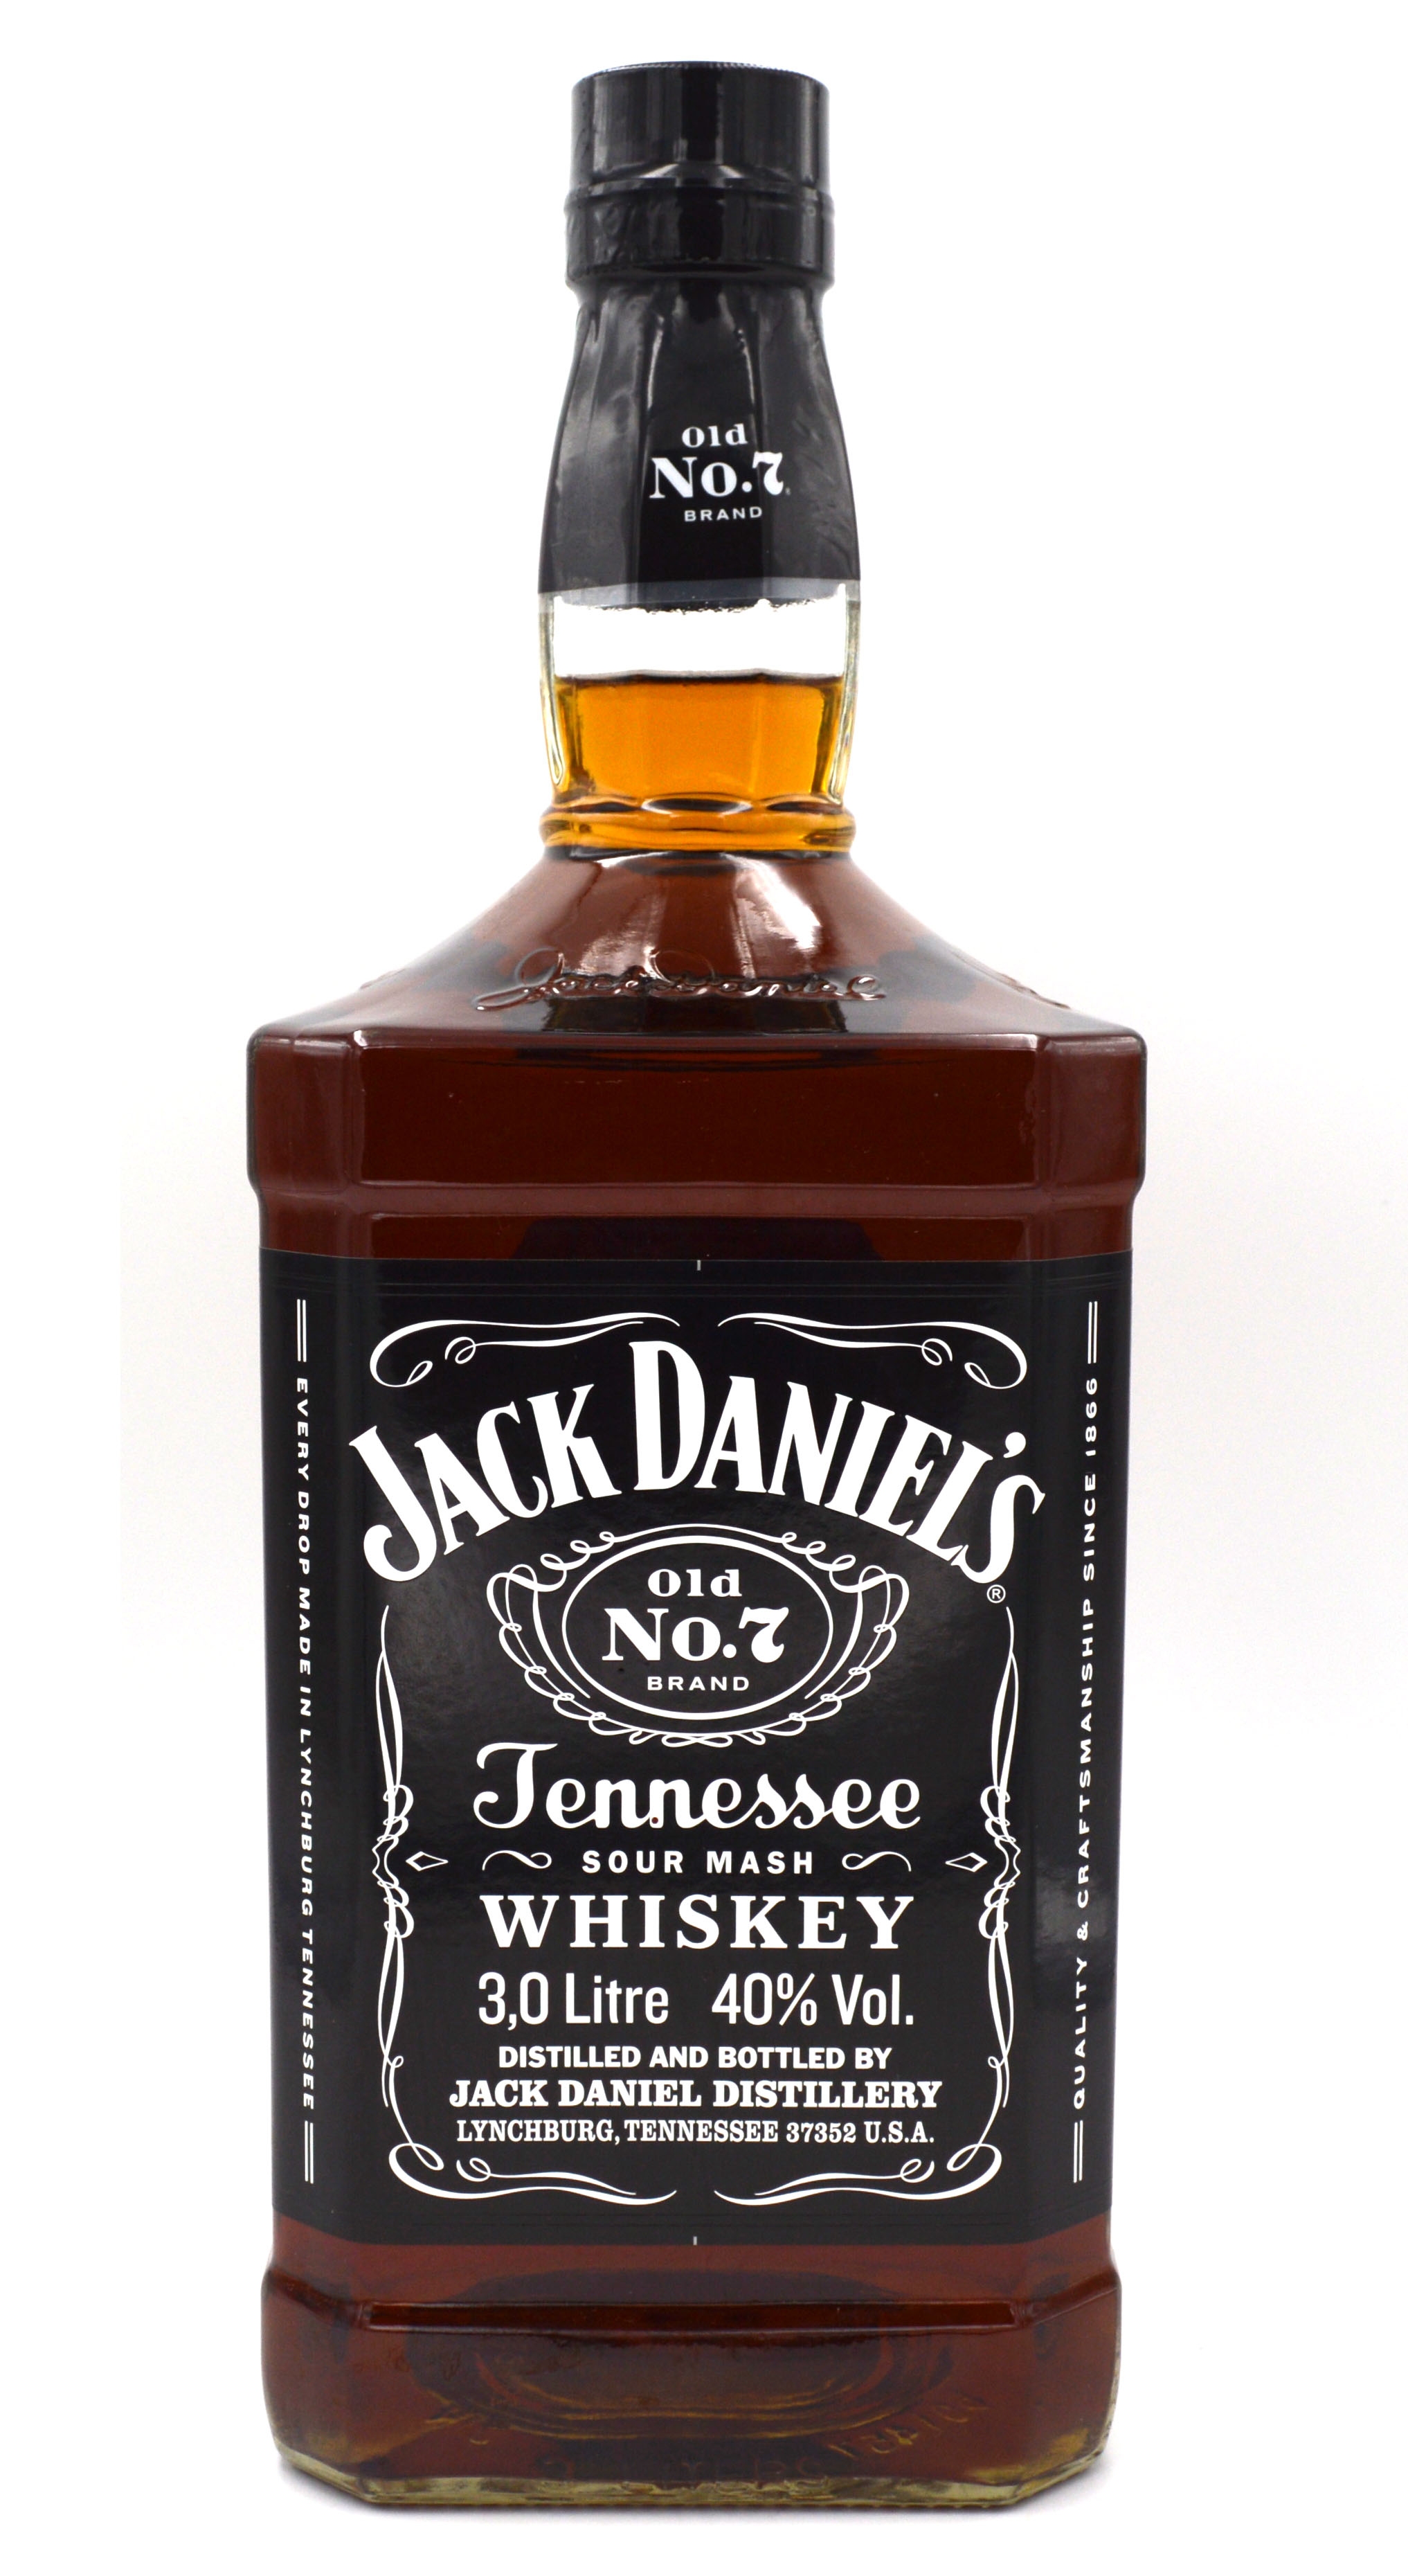 Jack Daniel's Old No.7 Whiskey double magnum bottle 3.0l | worldwidespirits